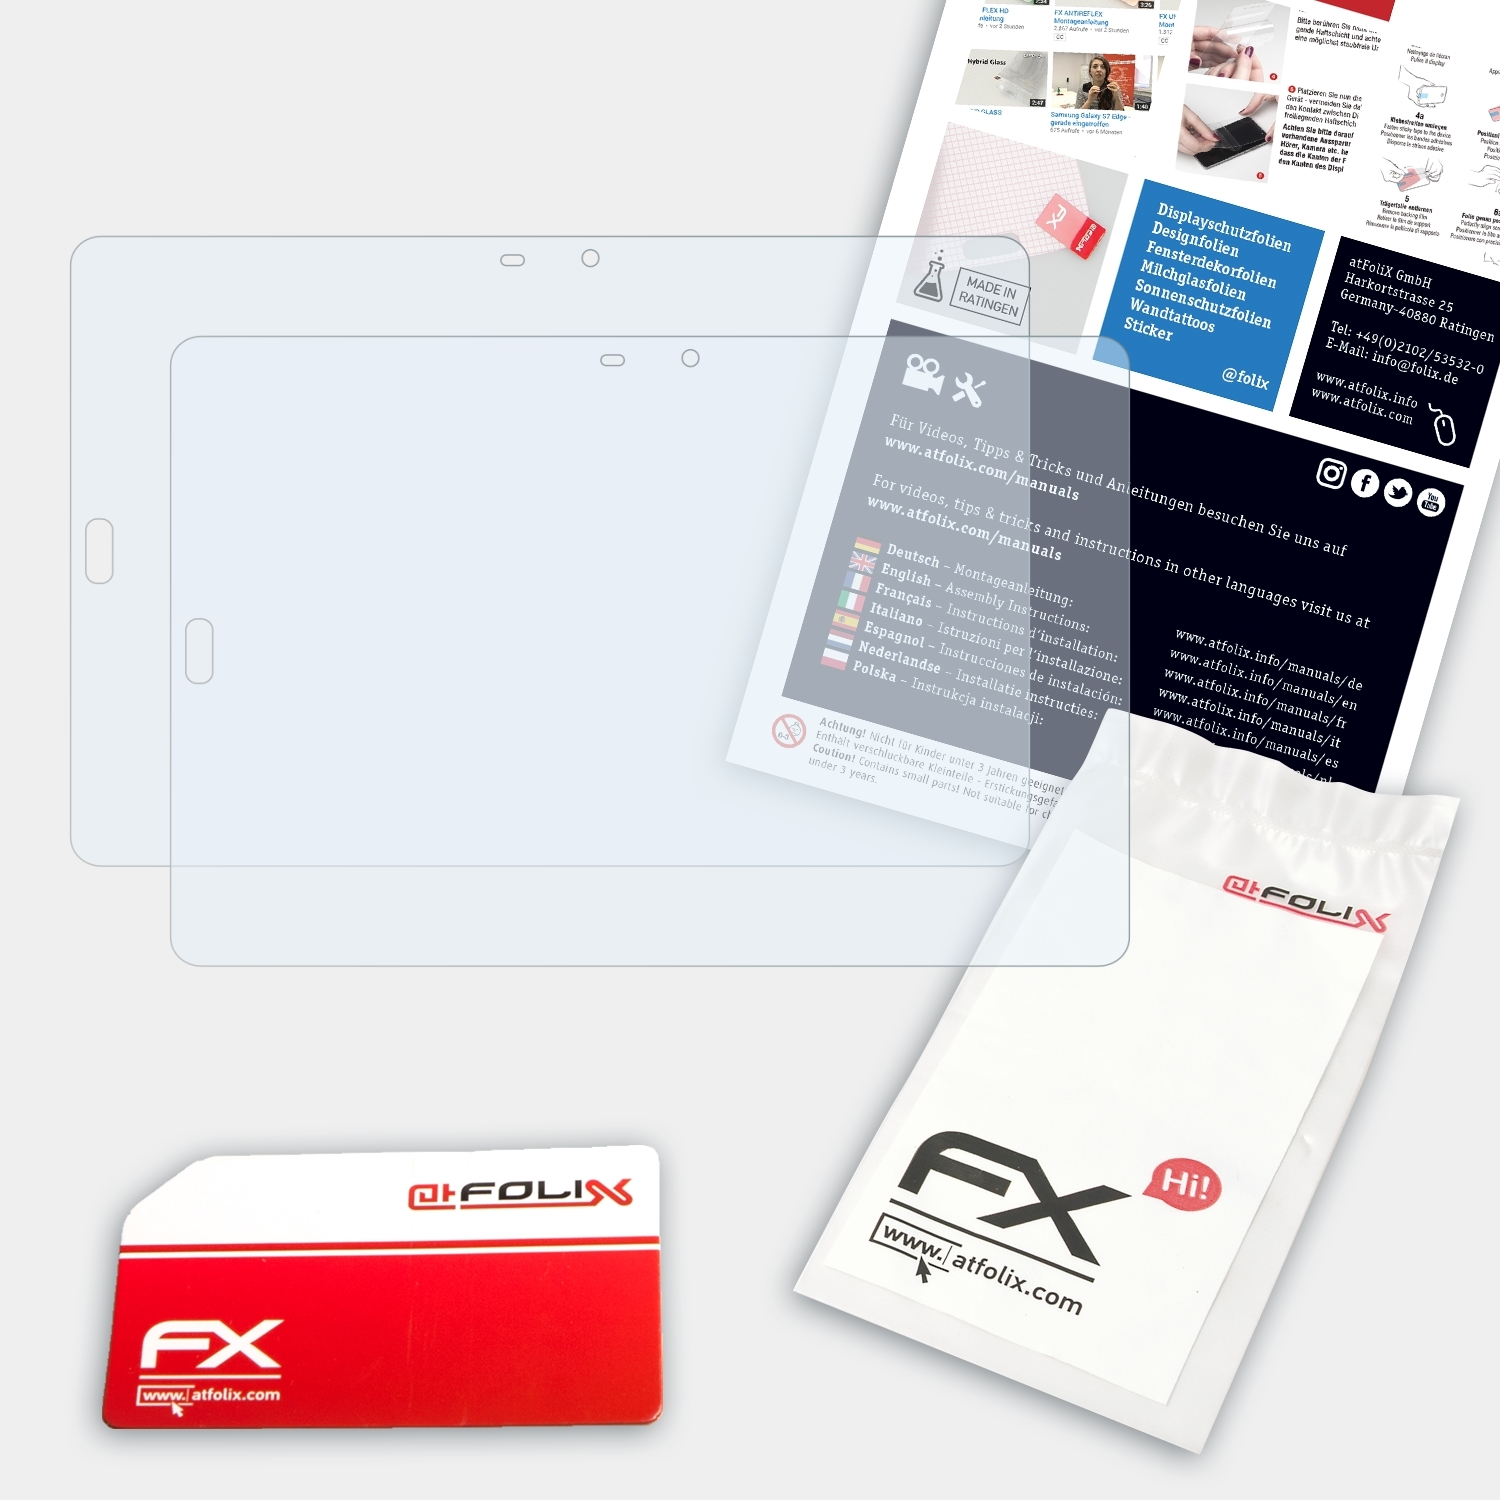 ATFOLIX 2x FX-Clear Displayschutz(für Onda V10 Pro)